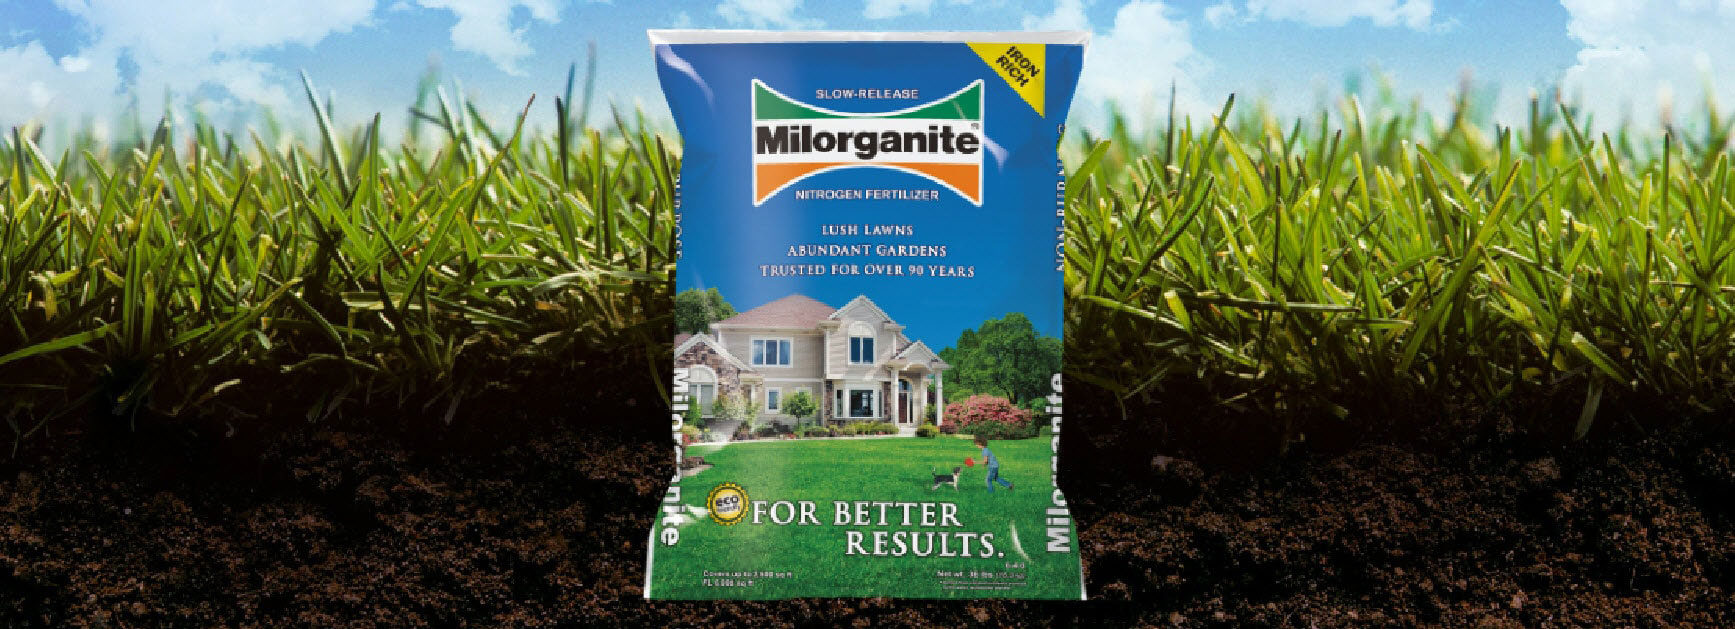 Milorganite_nitrogen_fertilizer_bag.jpg